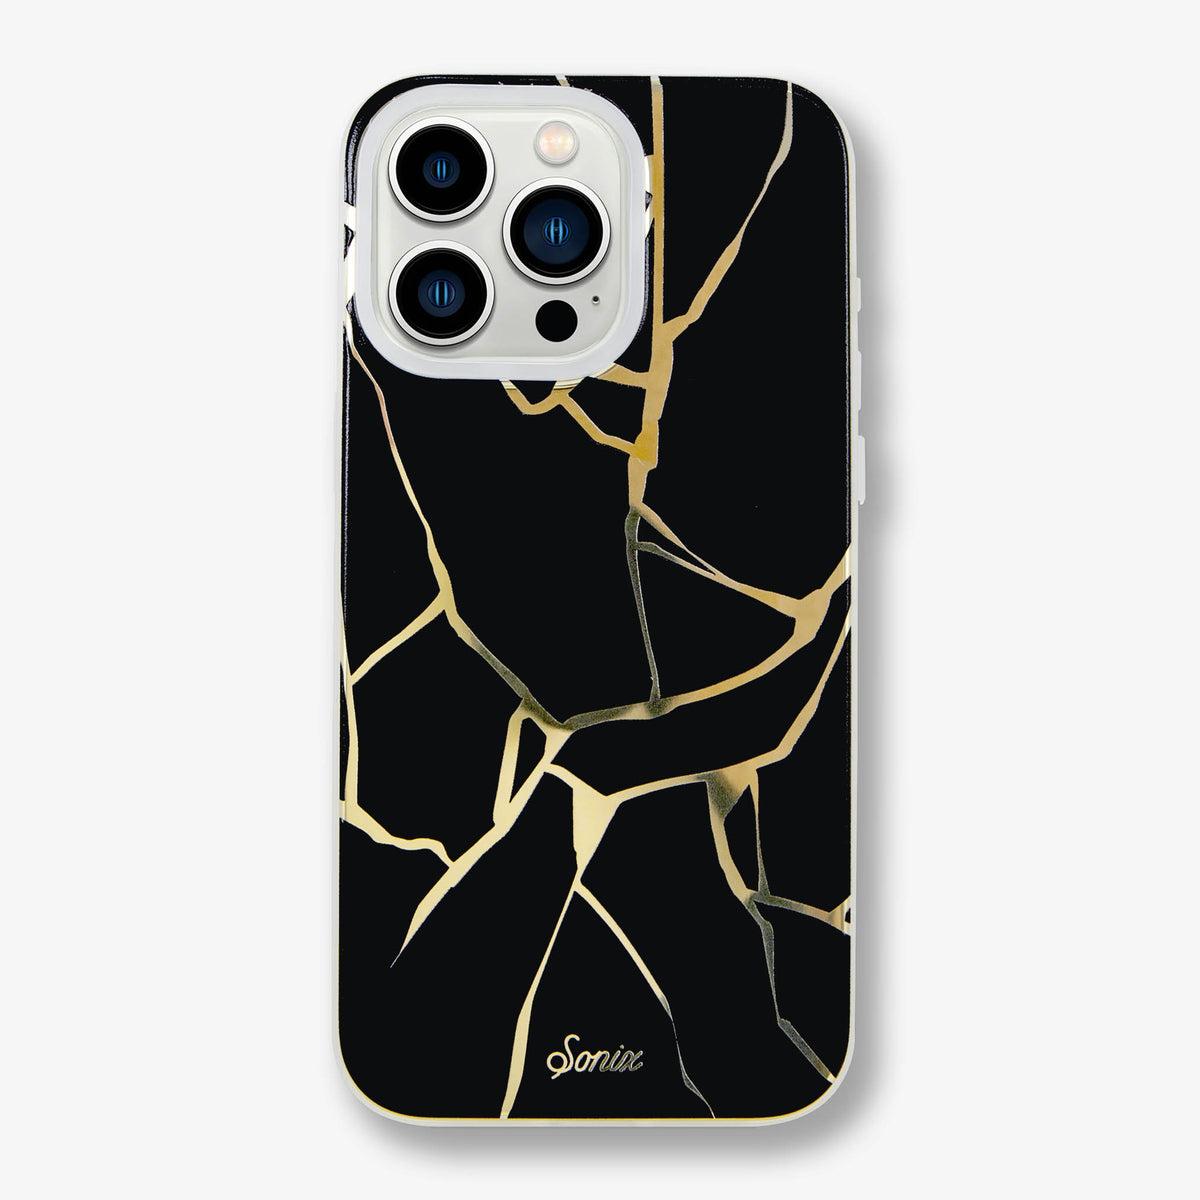 DARK SONIC HEDGEHOG iPhone 7 Case Cover